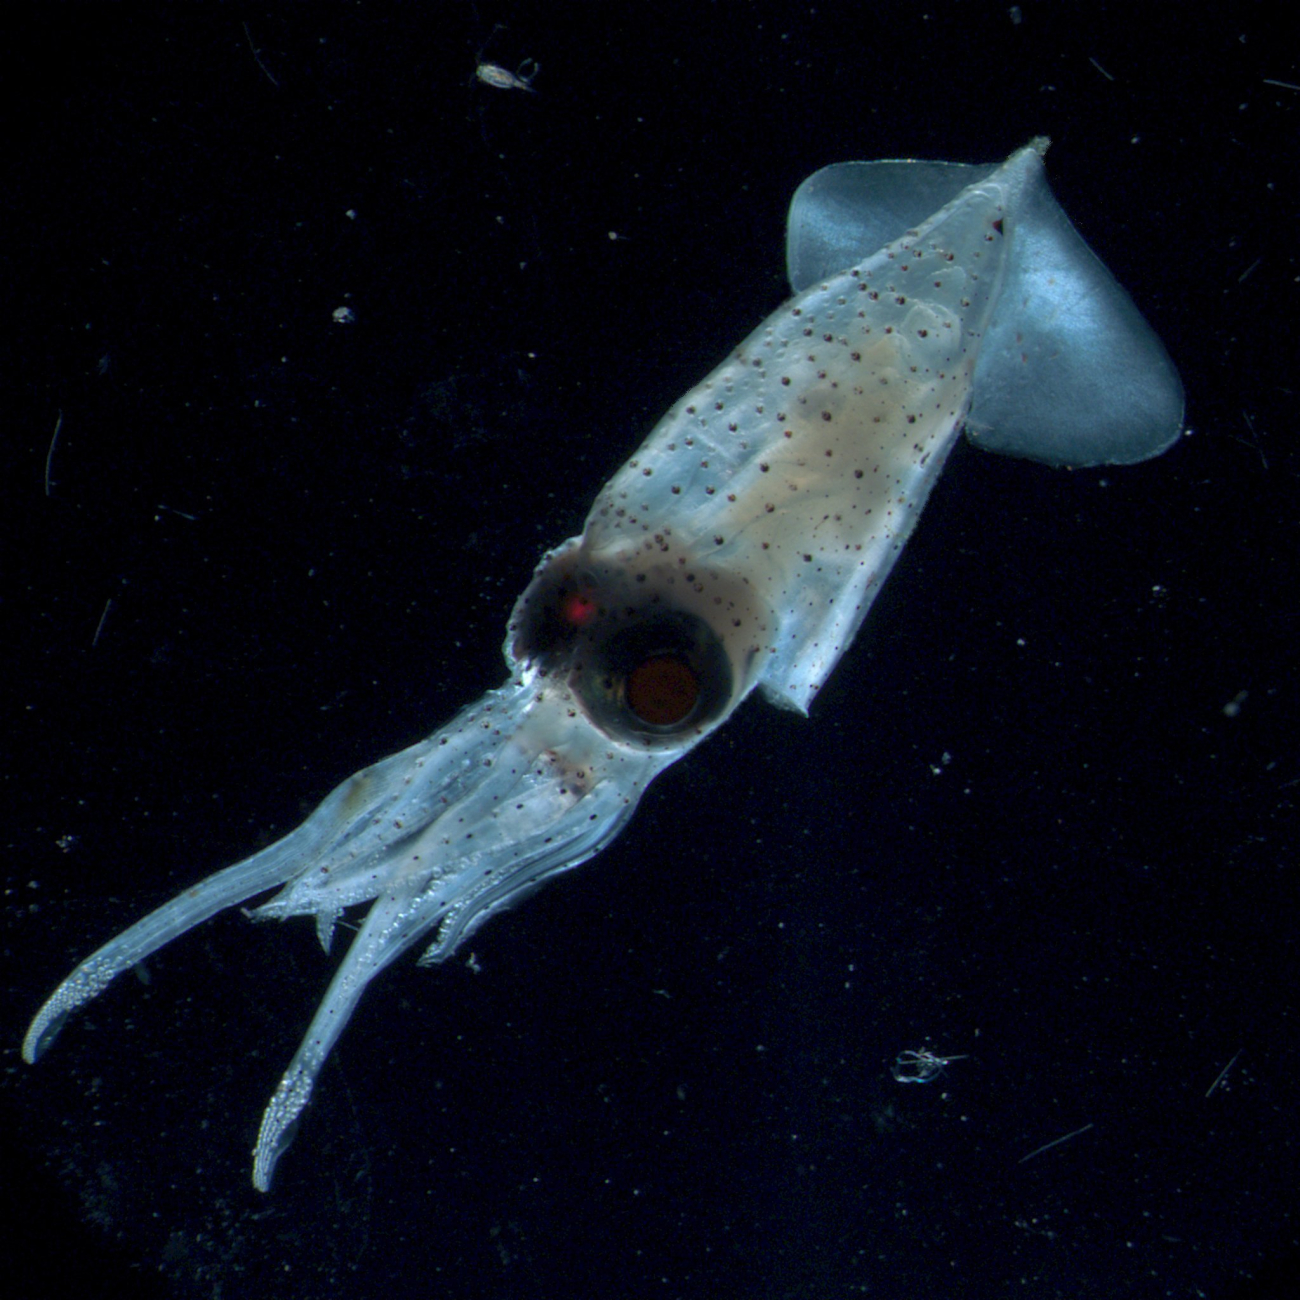 A one-centimeter larval squid